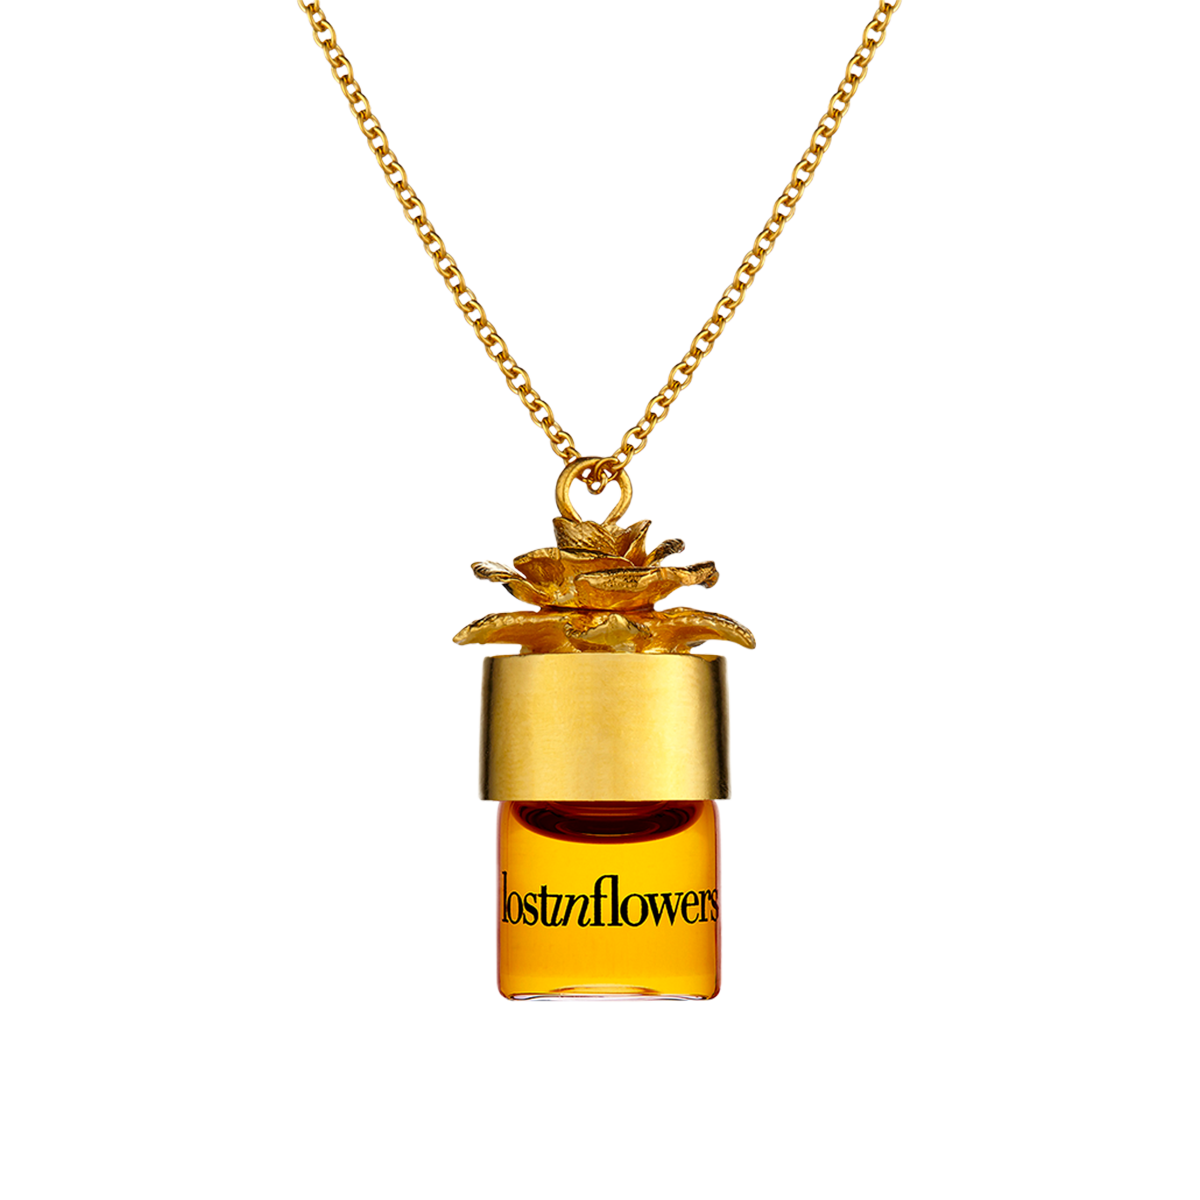 Strangelove - lostinflowers oil 24" potion pendant